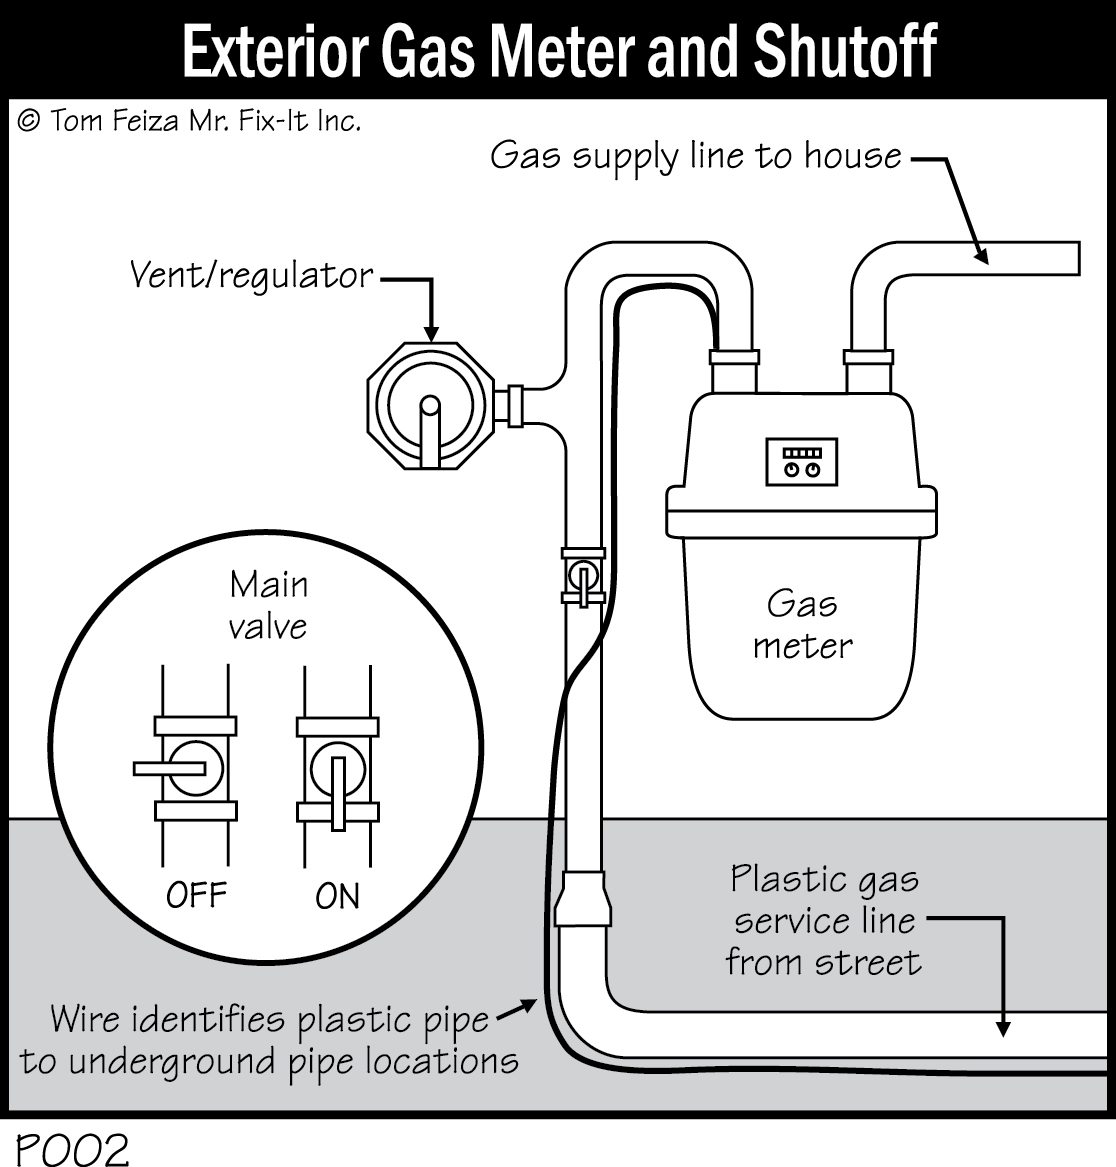 P002 - Exterior Gas Meter and Shutoff